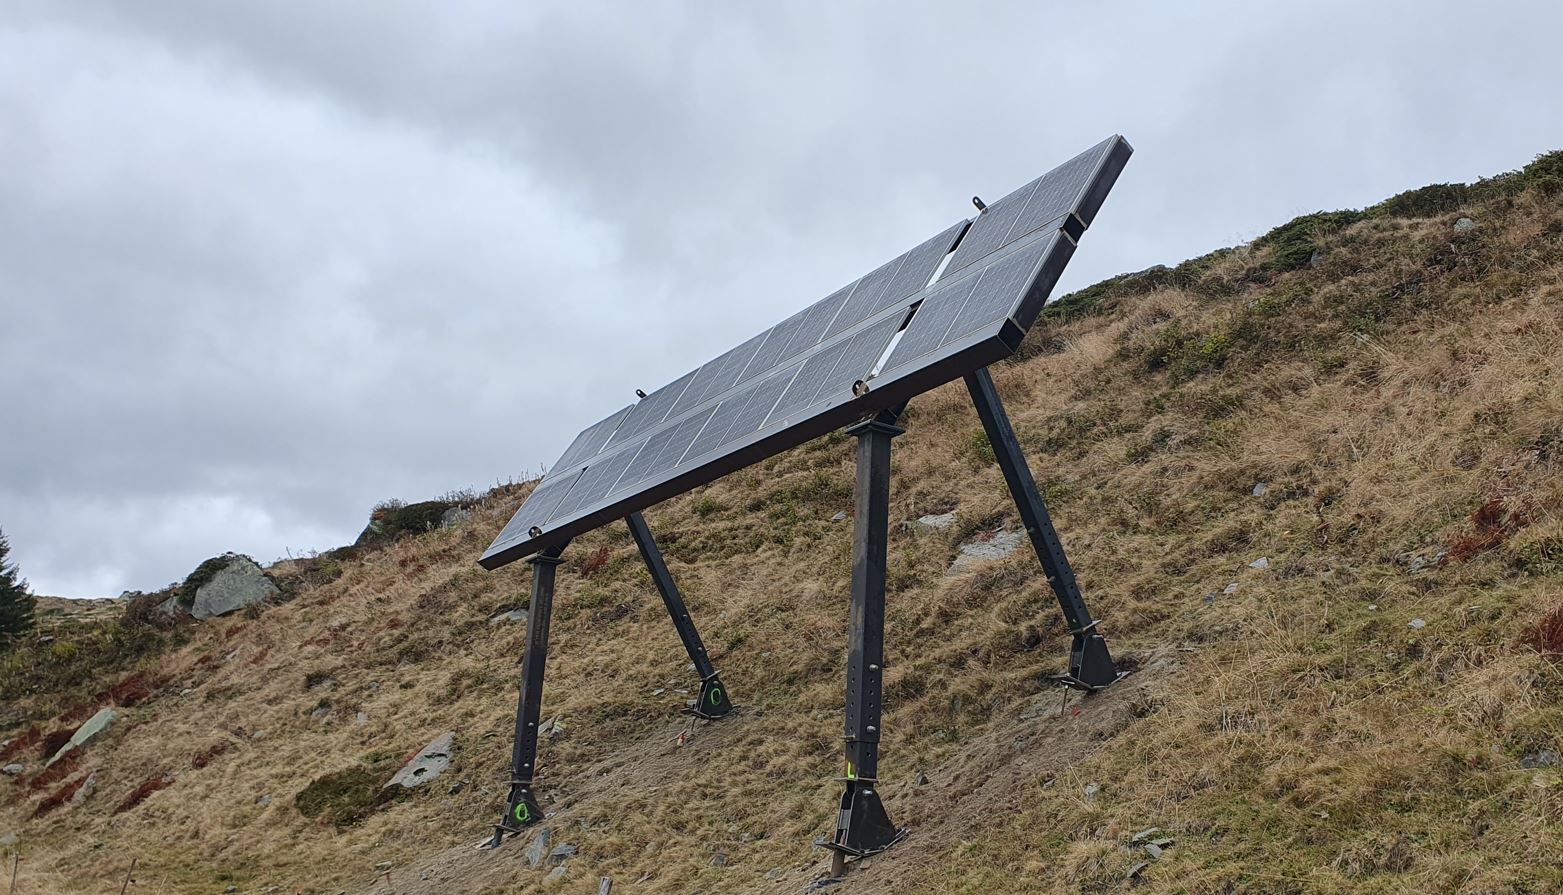 Test installation in Tujetsch at the NalpSolar alpine solar project